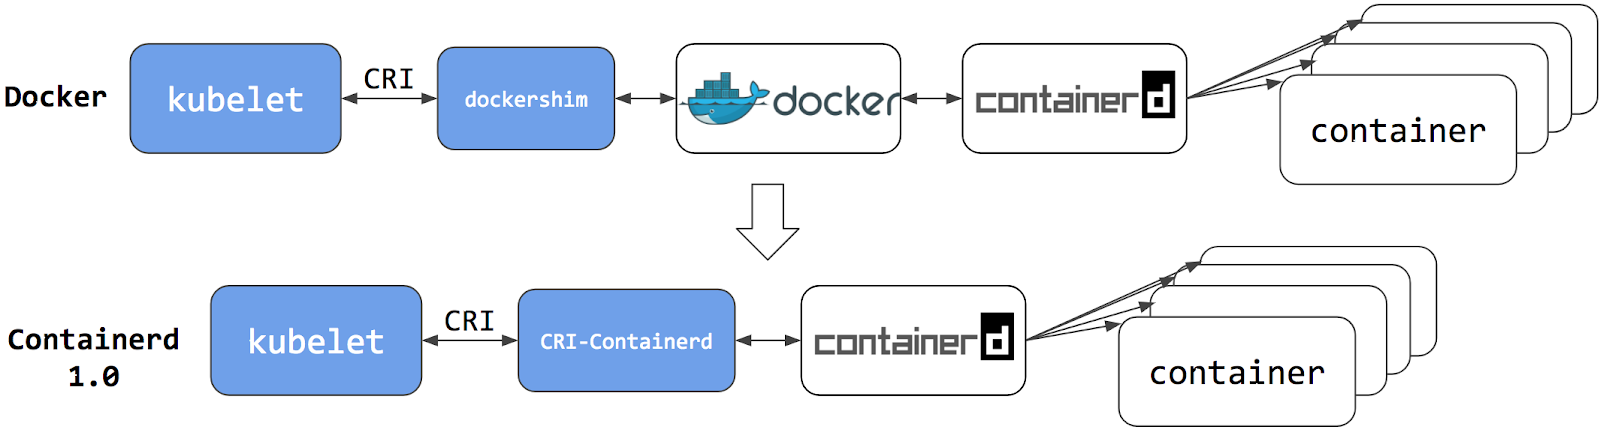 Dockershim vs. CRI with Containerd